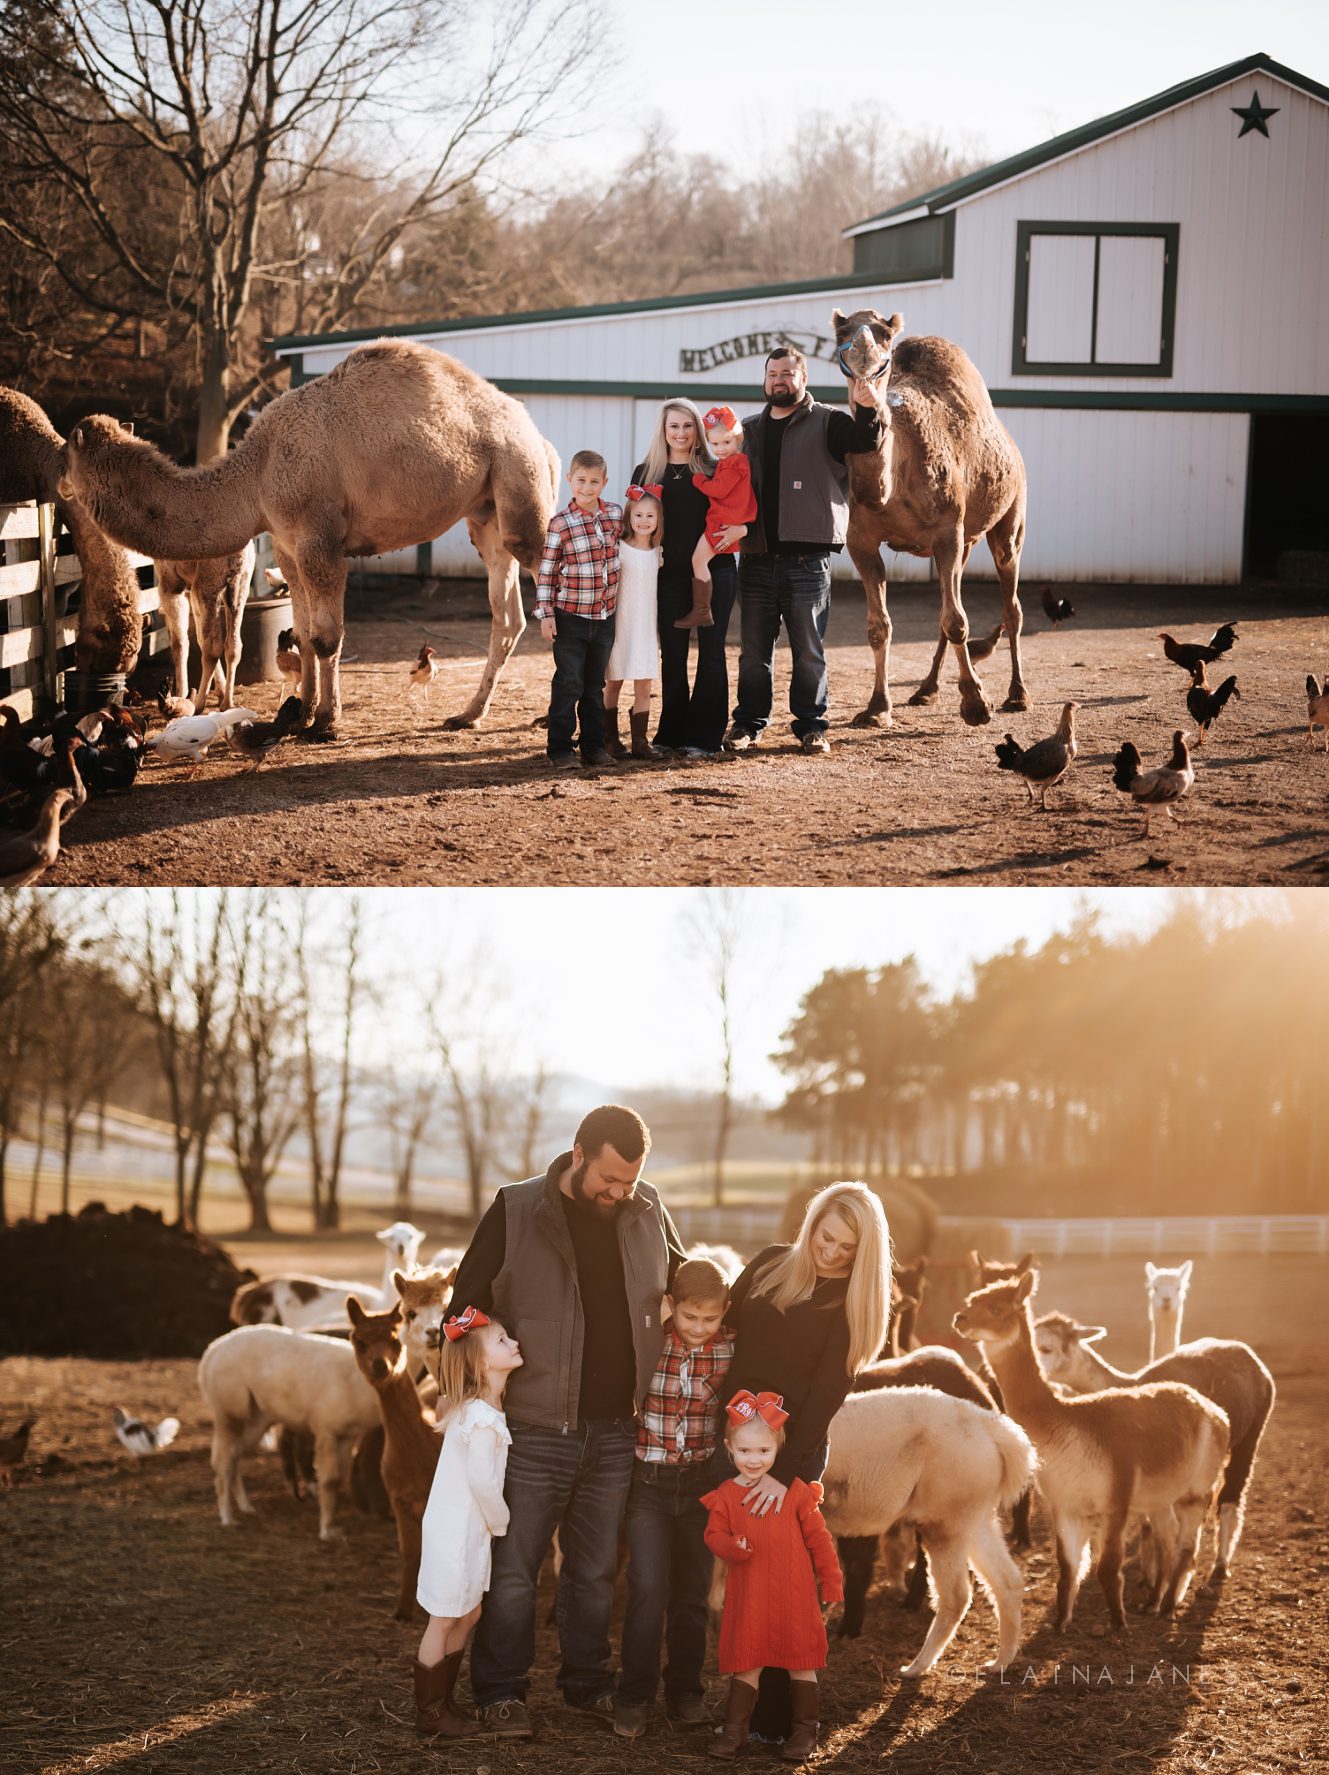 The Boone Family | An Exotic Animal Paradise - Elaina Janes Photography